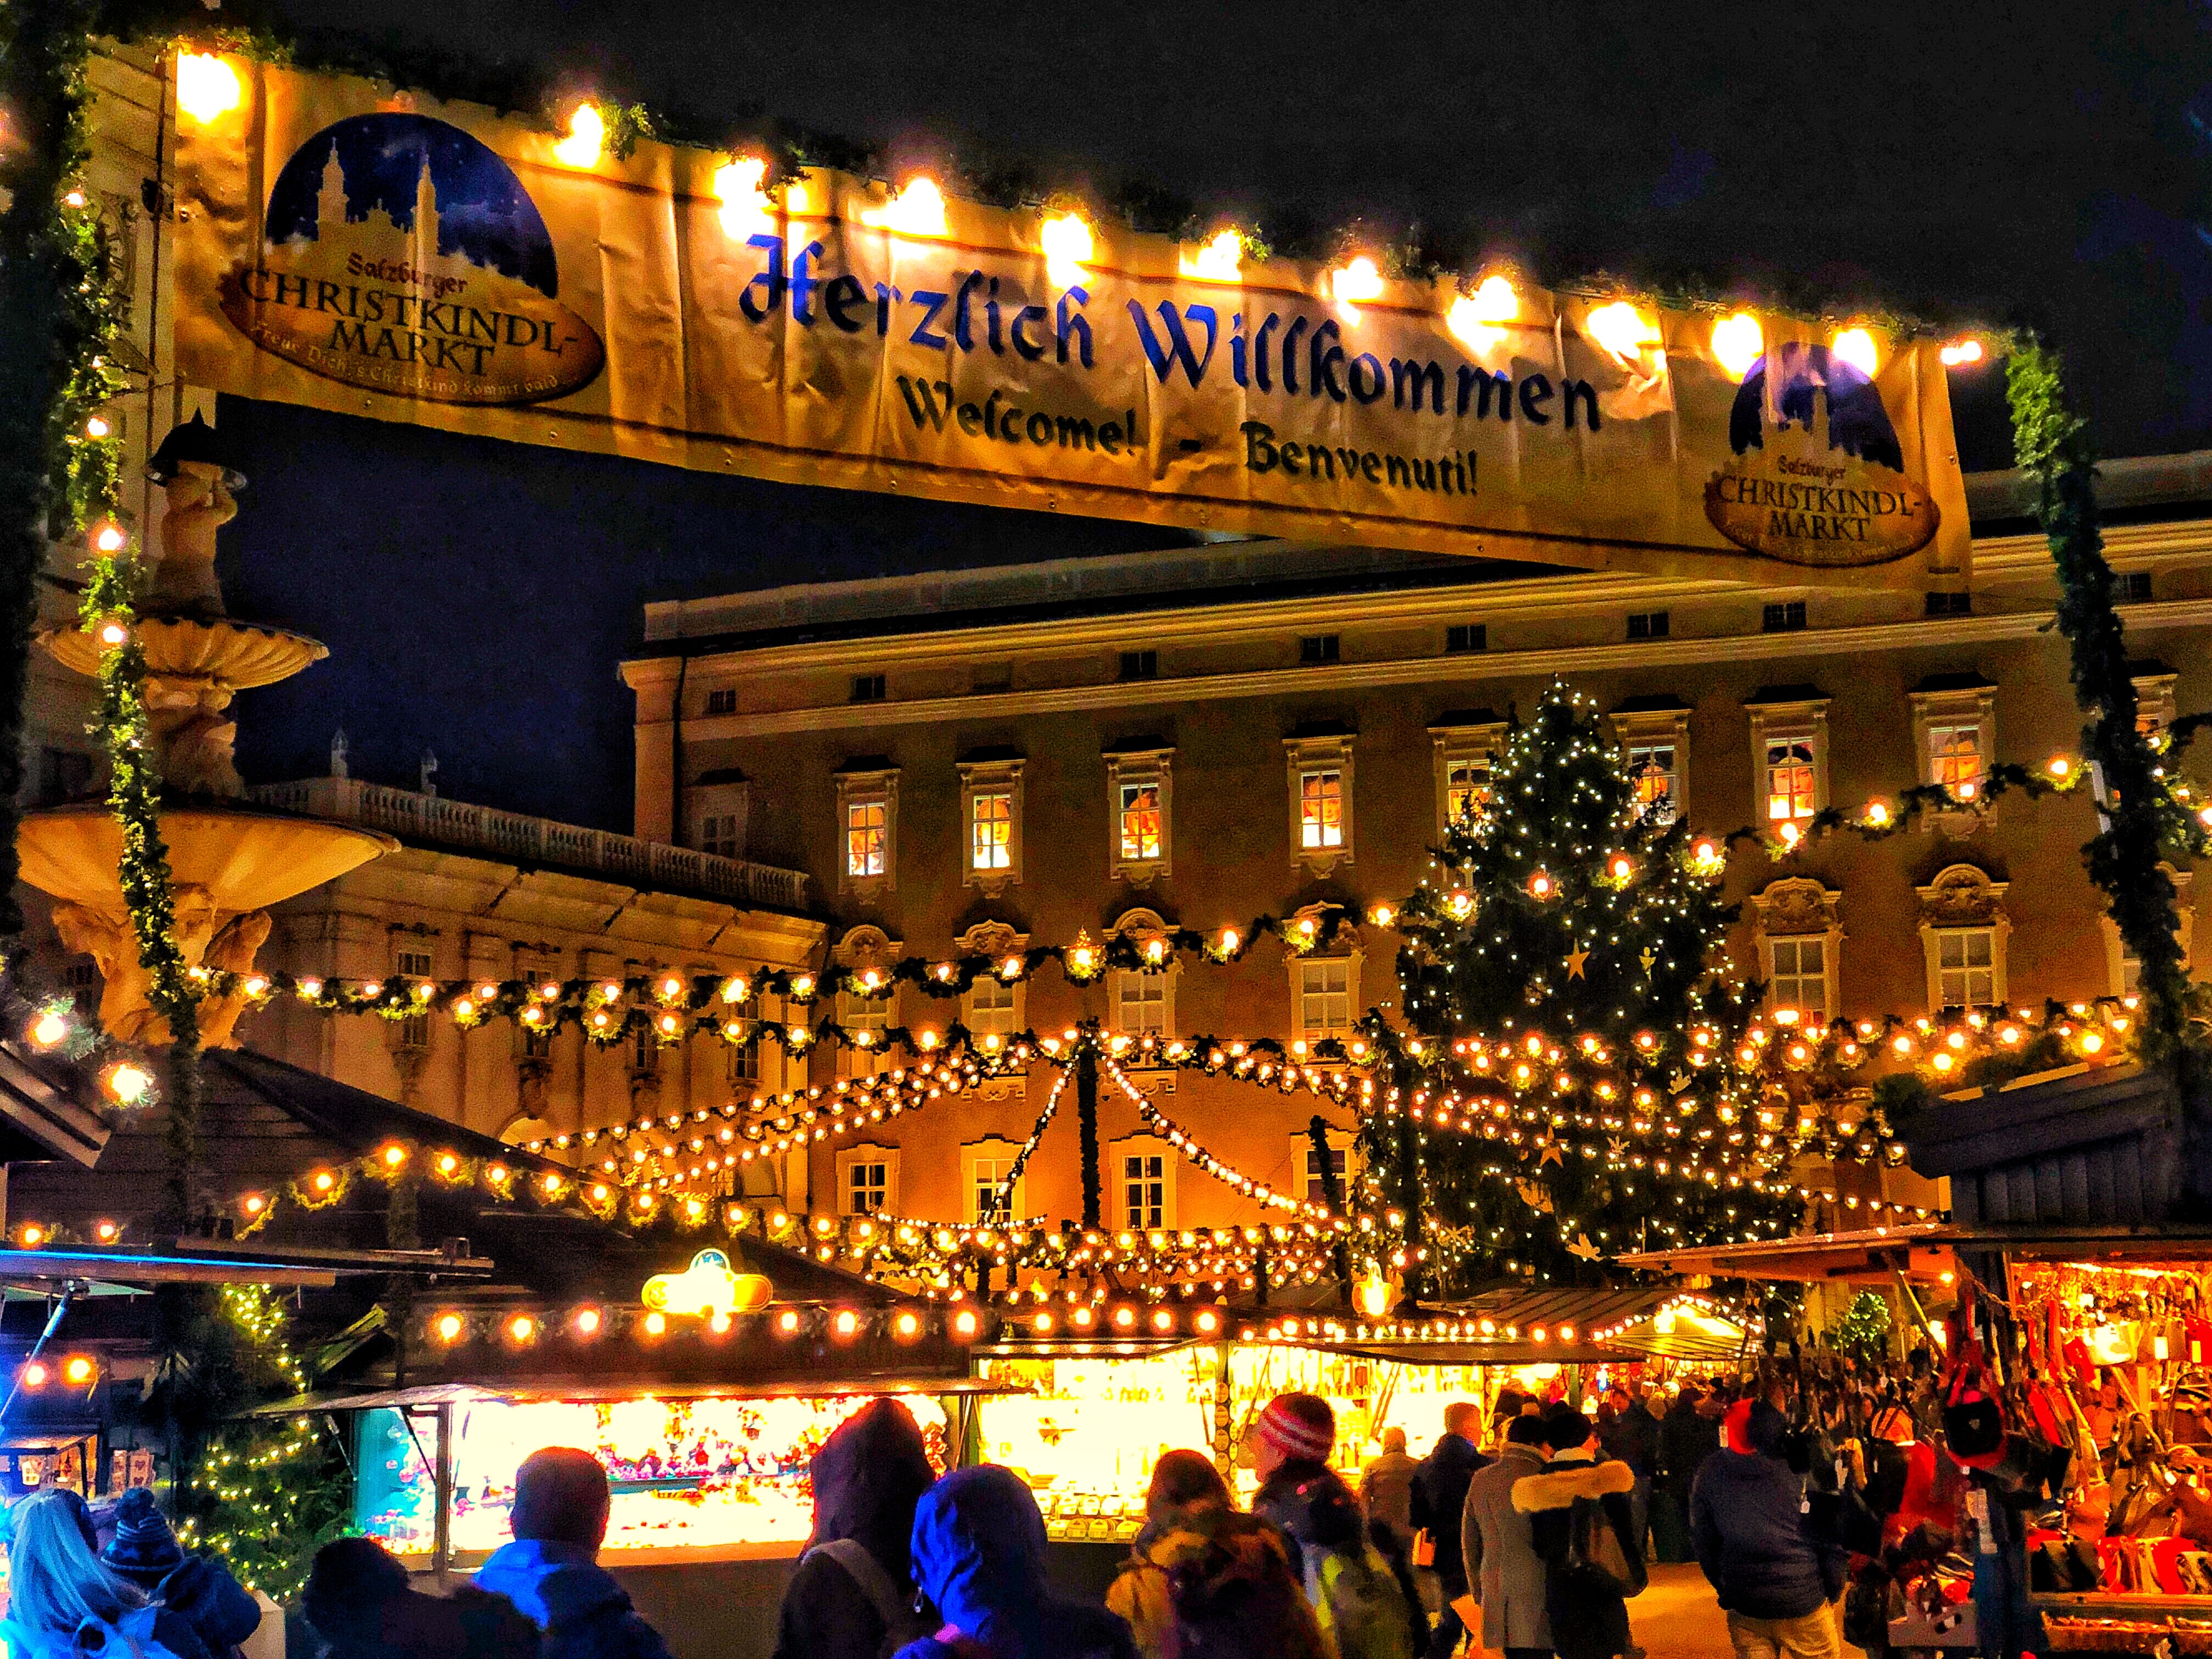 The Salzburg Christmas Market